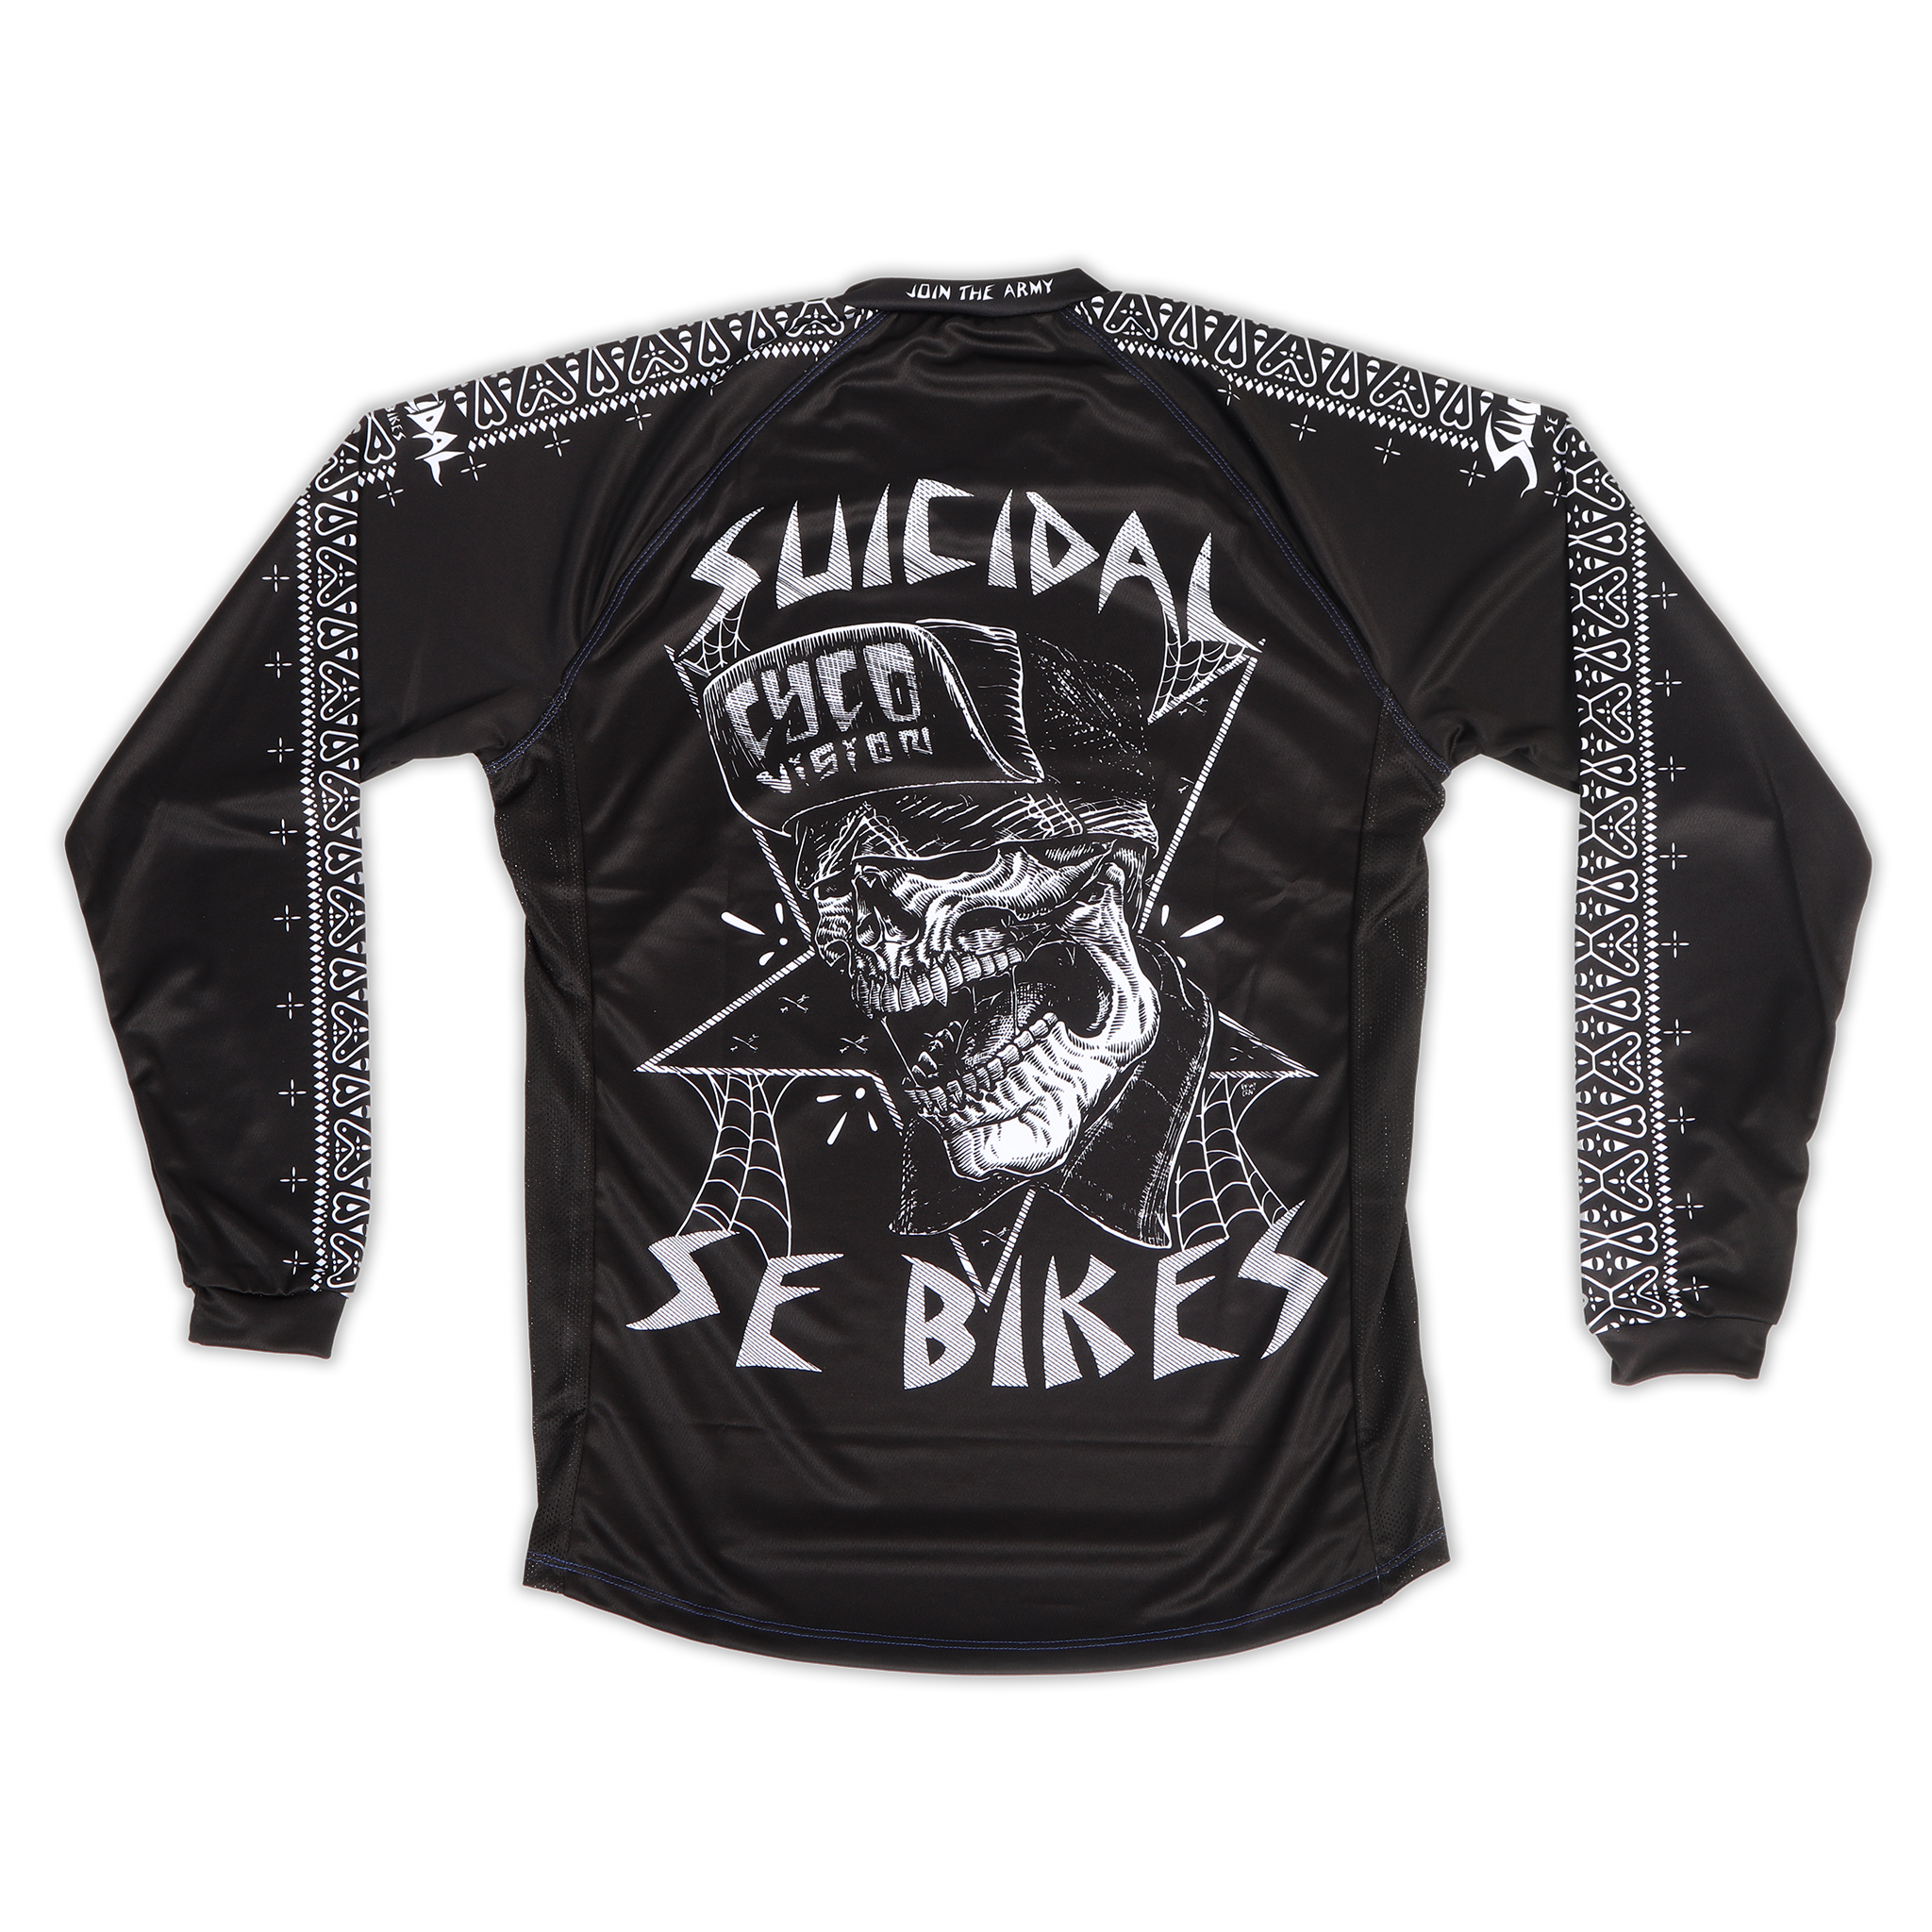 Suicidal Tendencies SX Bikes collaboration Jersey